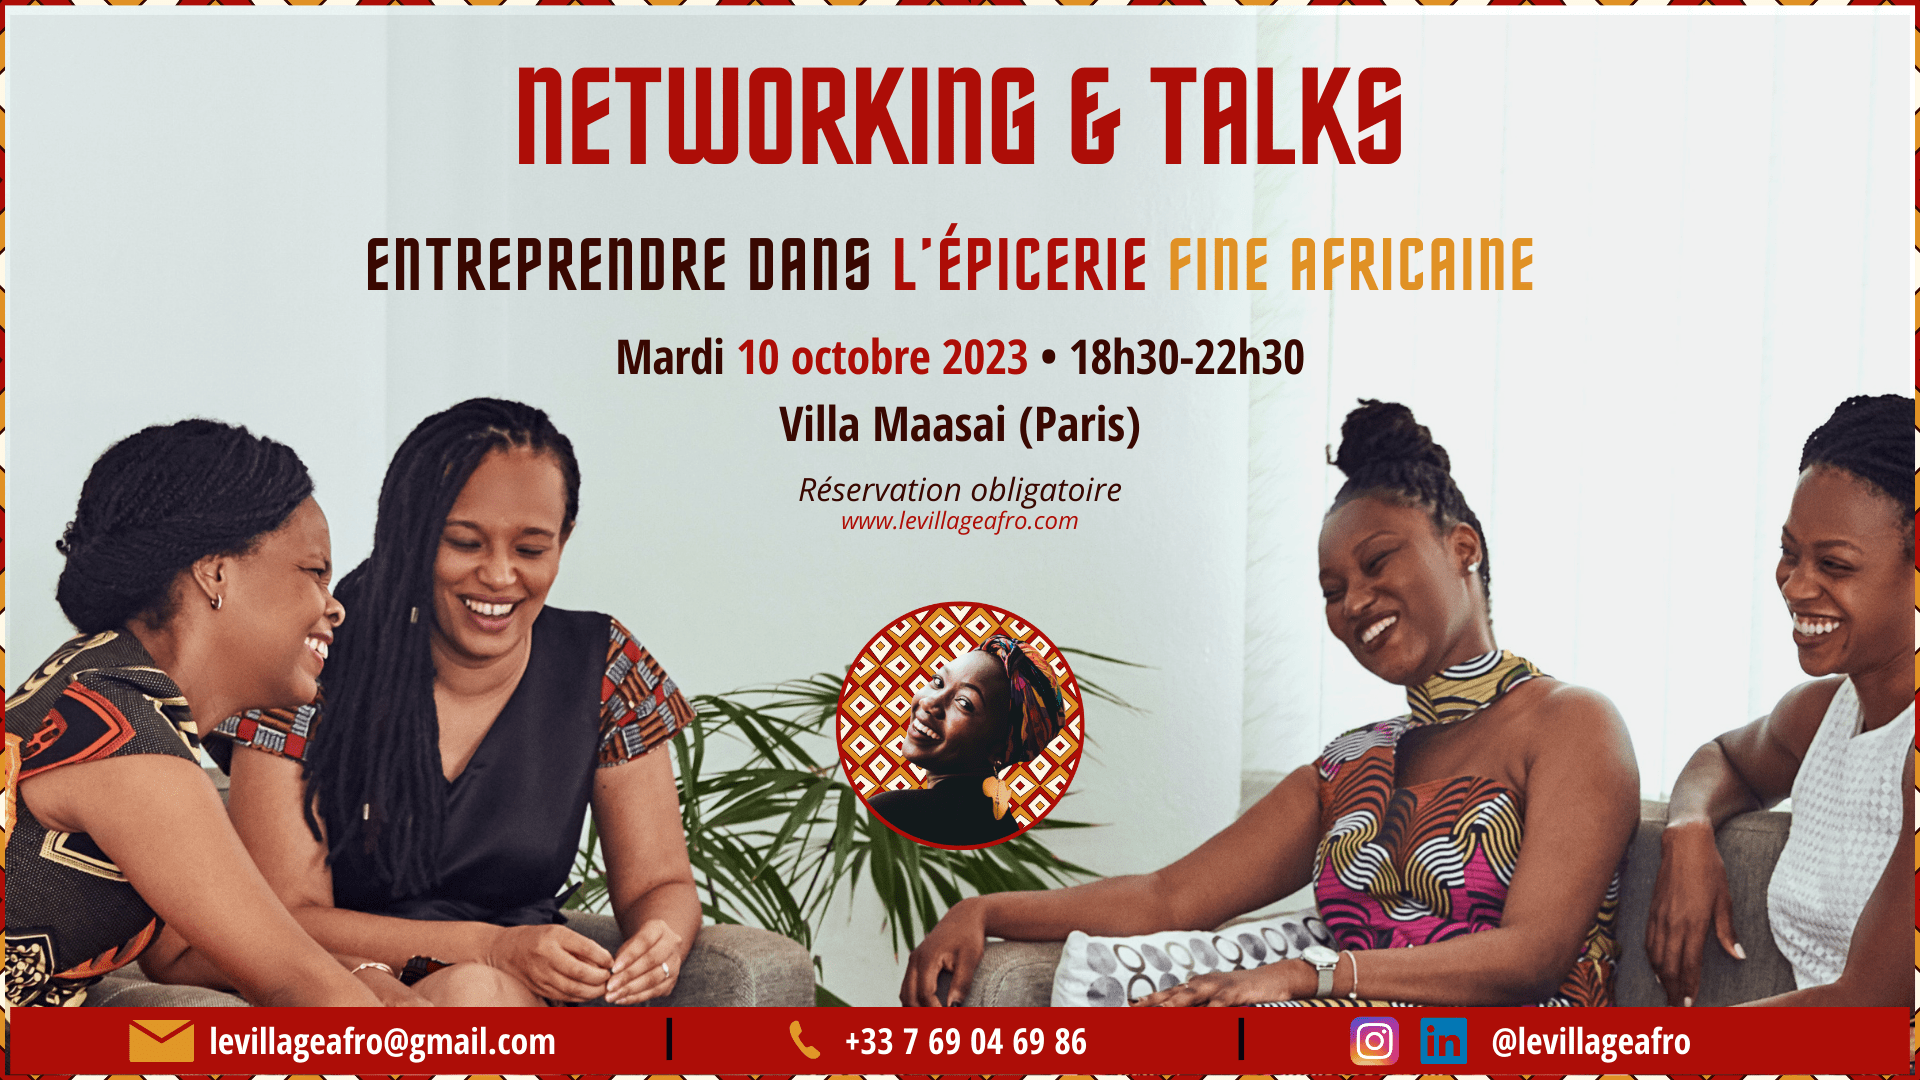 Networking & Talks - Épicerie FINE africaine